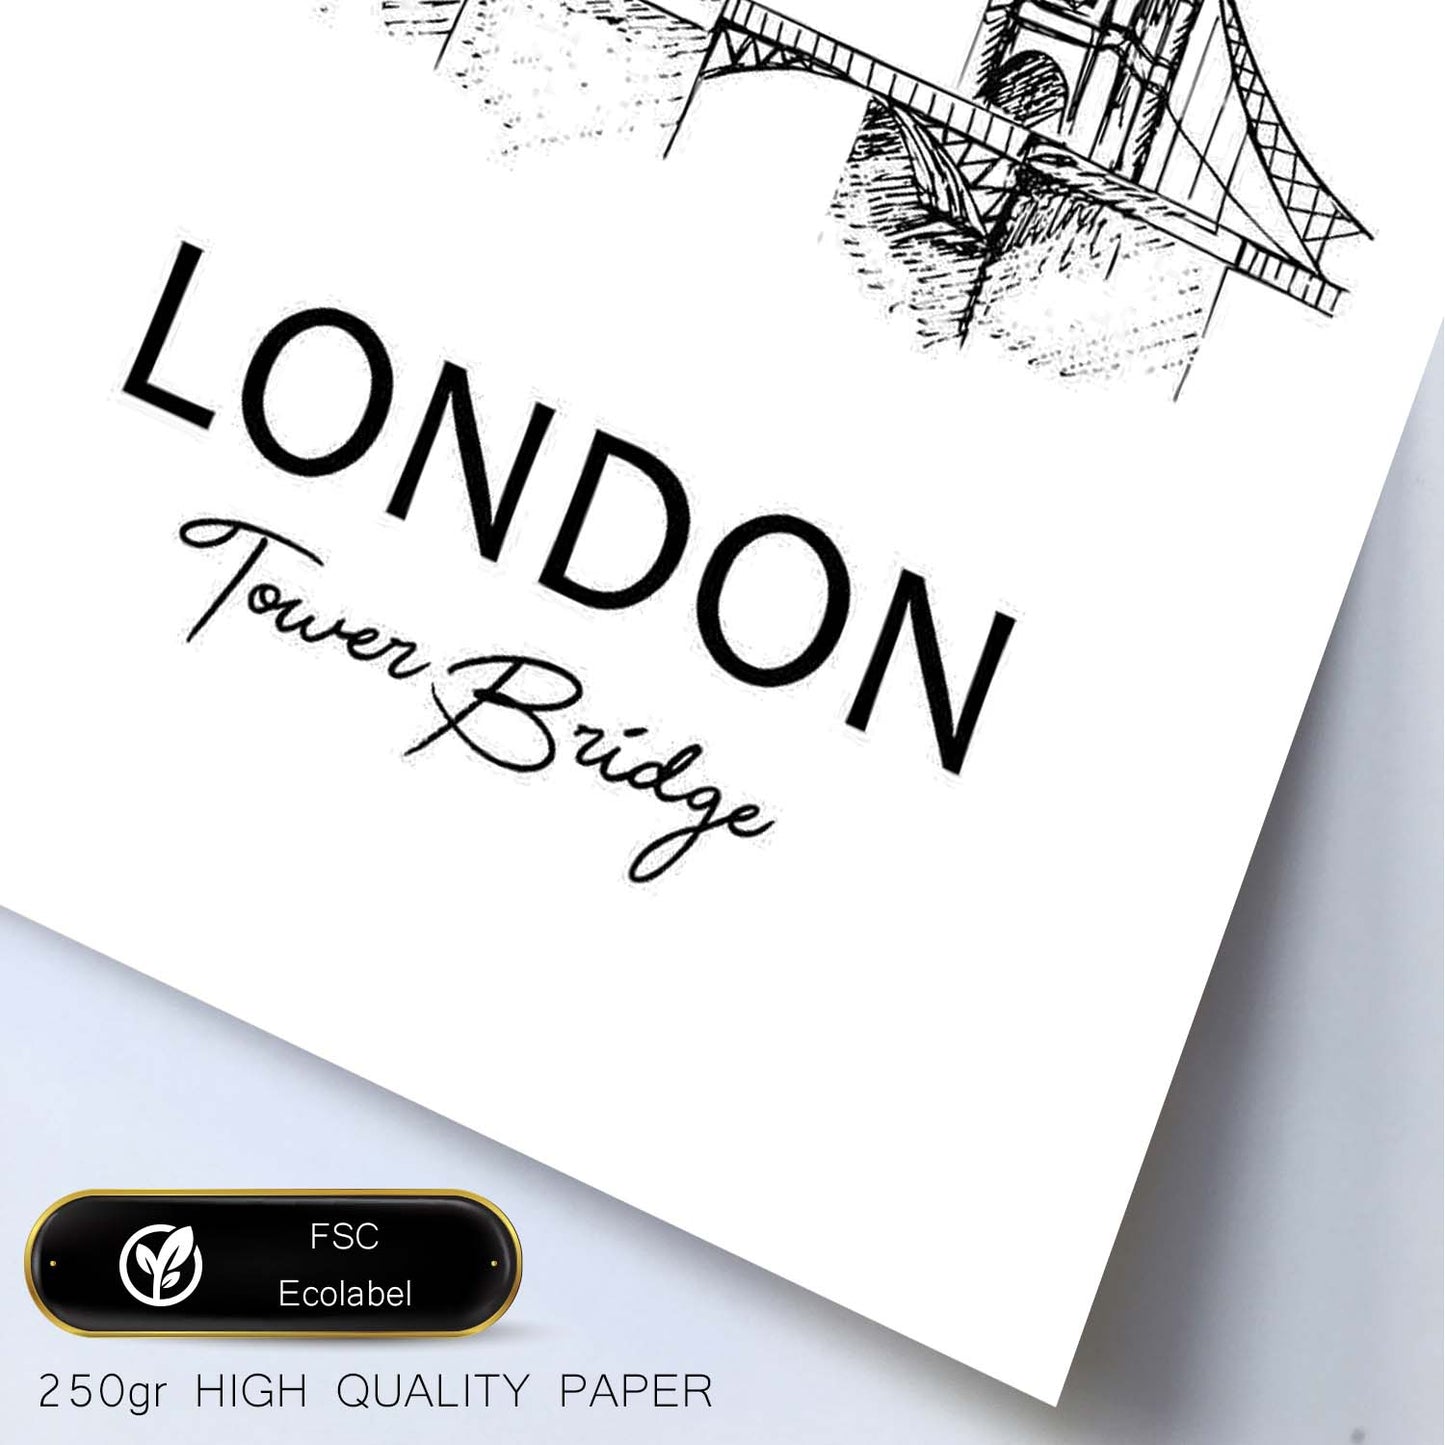 Poster de Londres - Tower bridge. Láminas con monumentos de ciudades.-Artwork-Nacnic-Nacnic Estudio SL